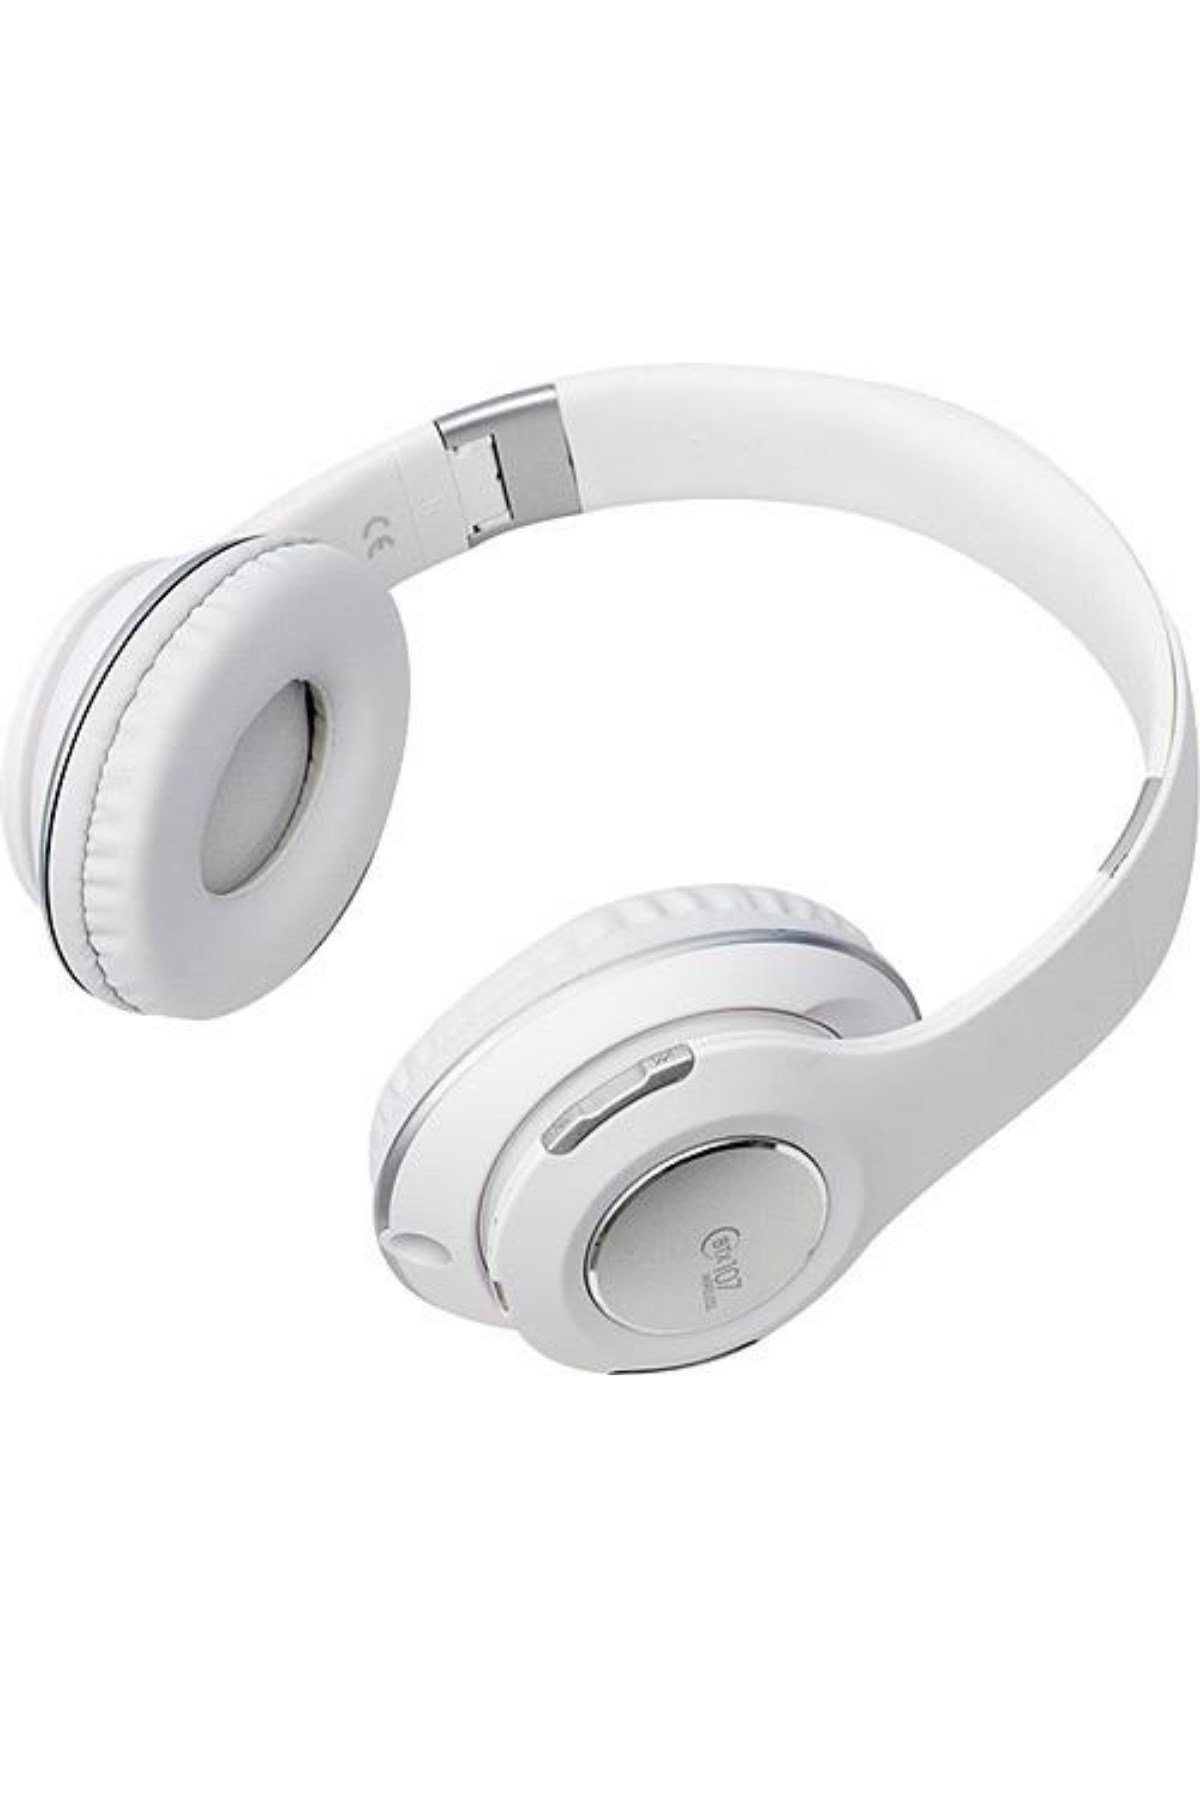 Extra Bass Kablosuz Kulaklık Bluetooth Kulaklık Kulak üstü Powerway Btx 107